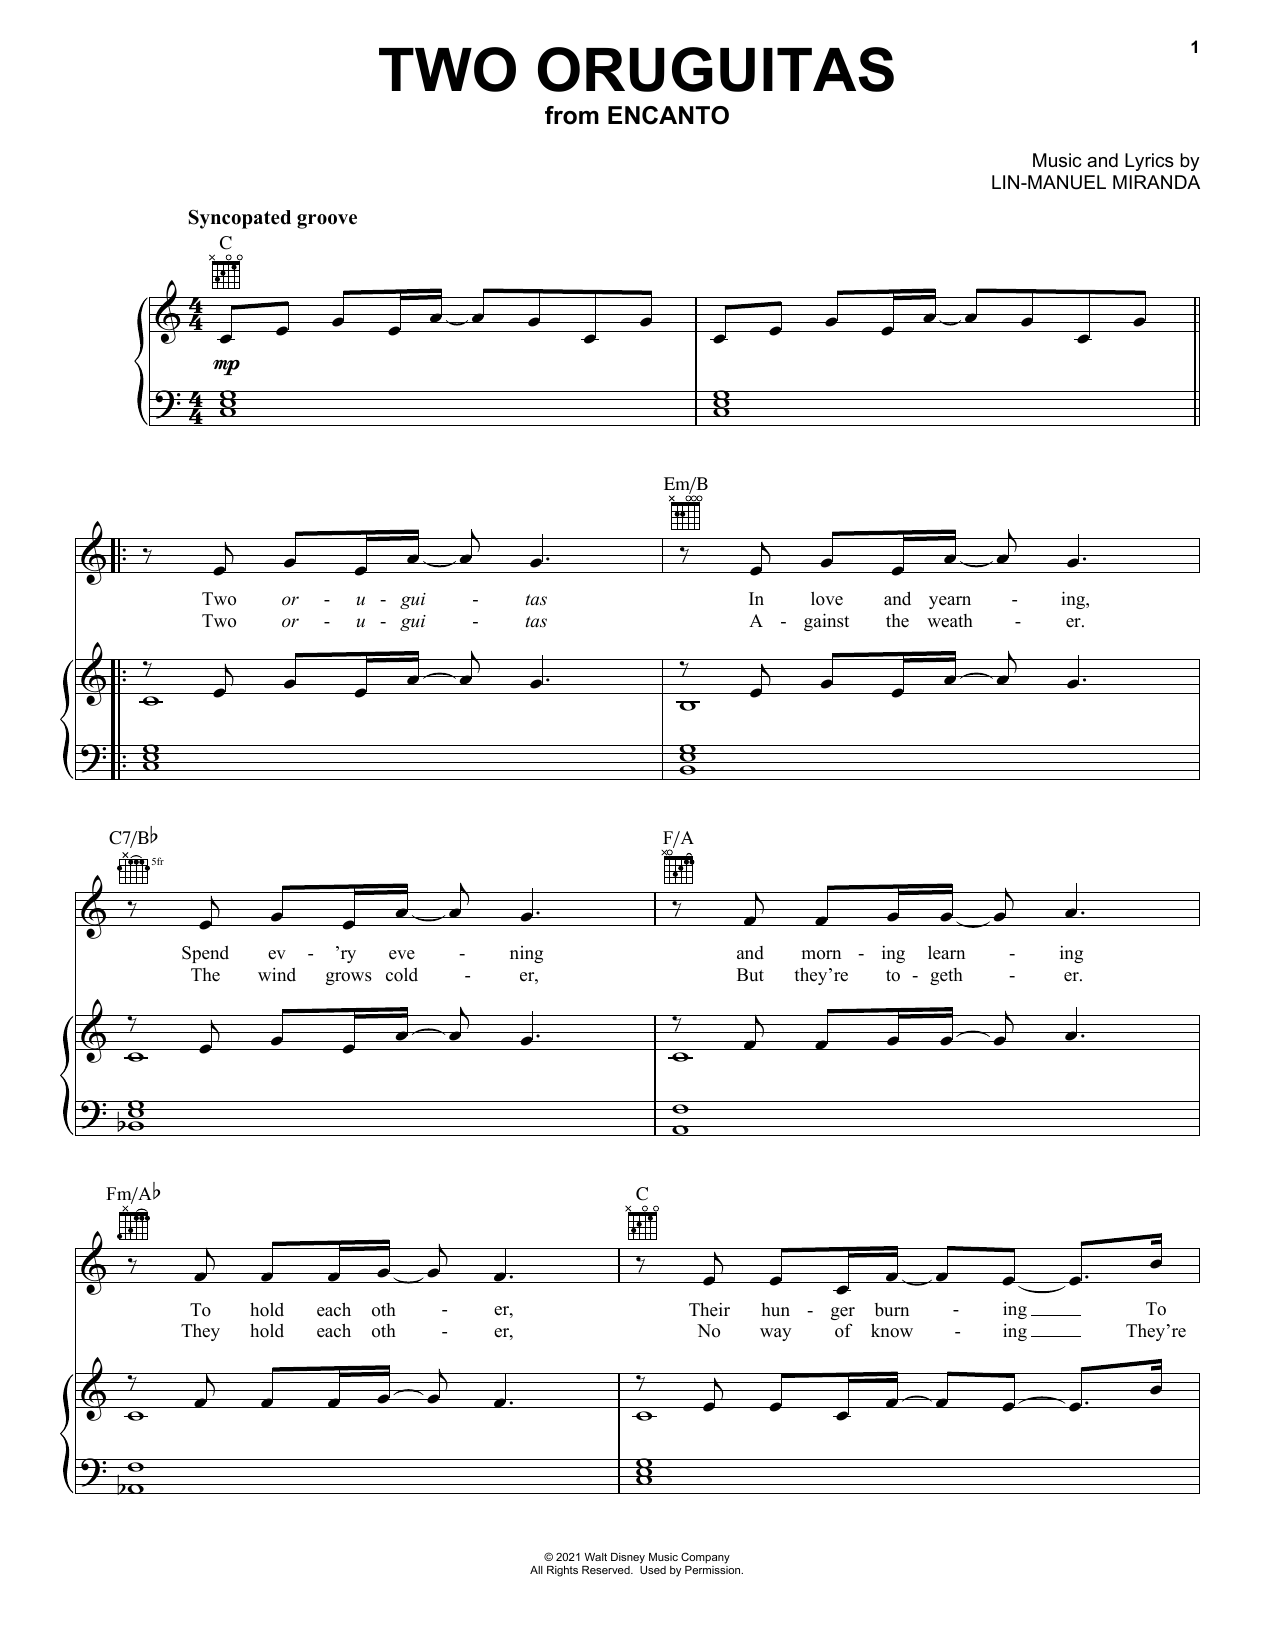 Lin-Manuel Miranda Two Oruguitas (from Encanto) Sheet Music Notes & Chords for Easy Guitar Tab - Download or Print PDF